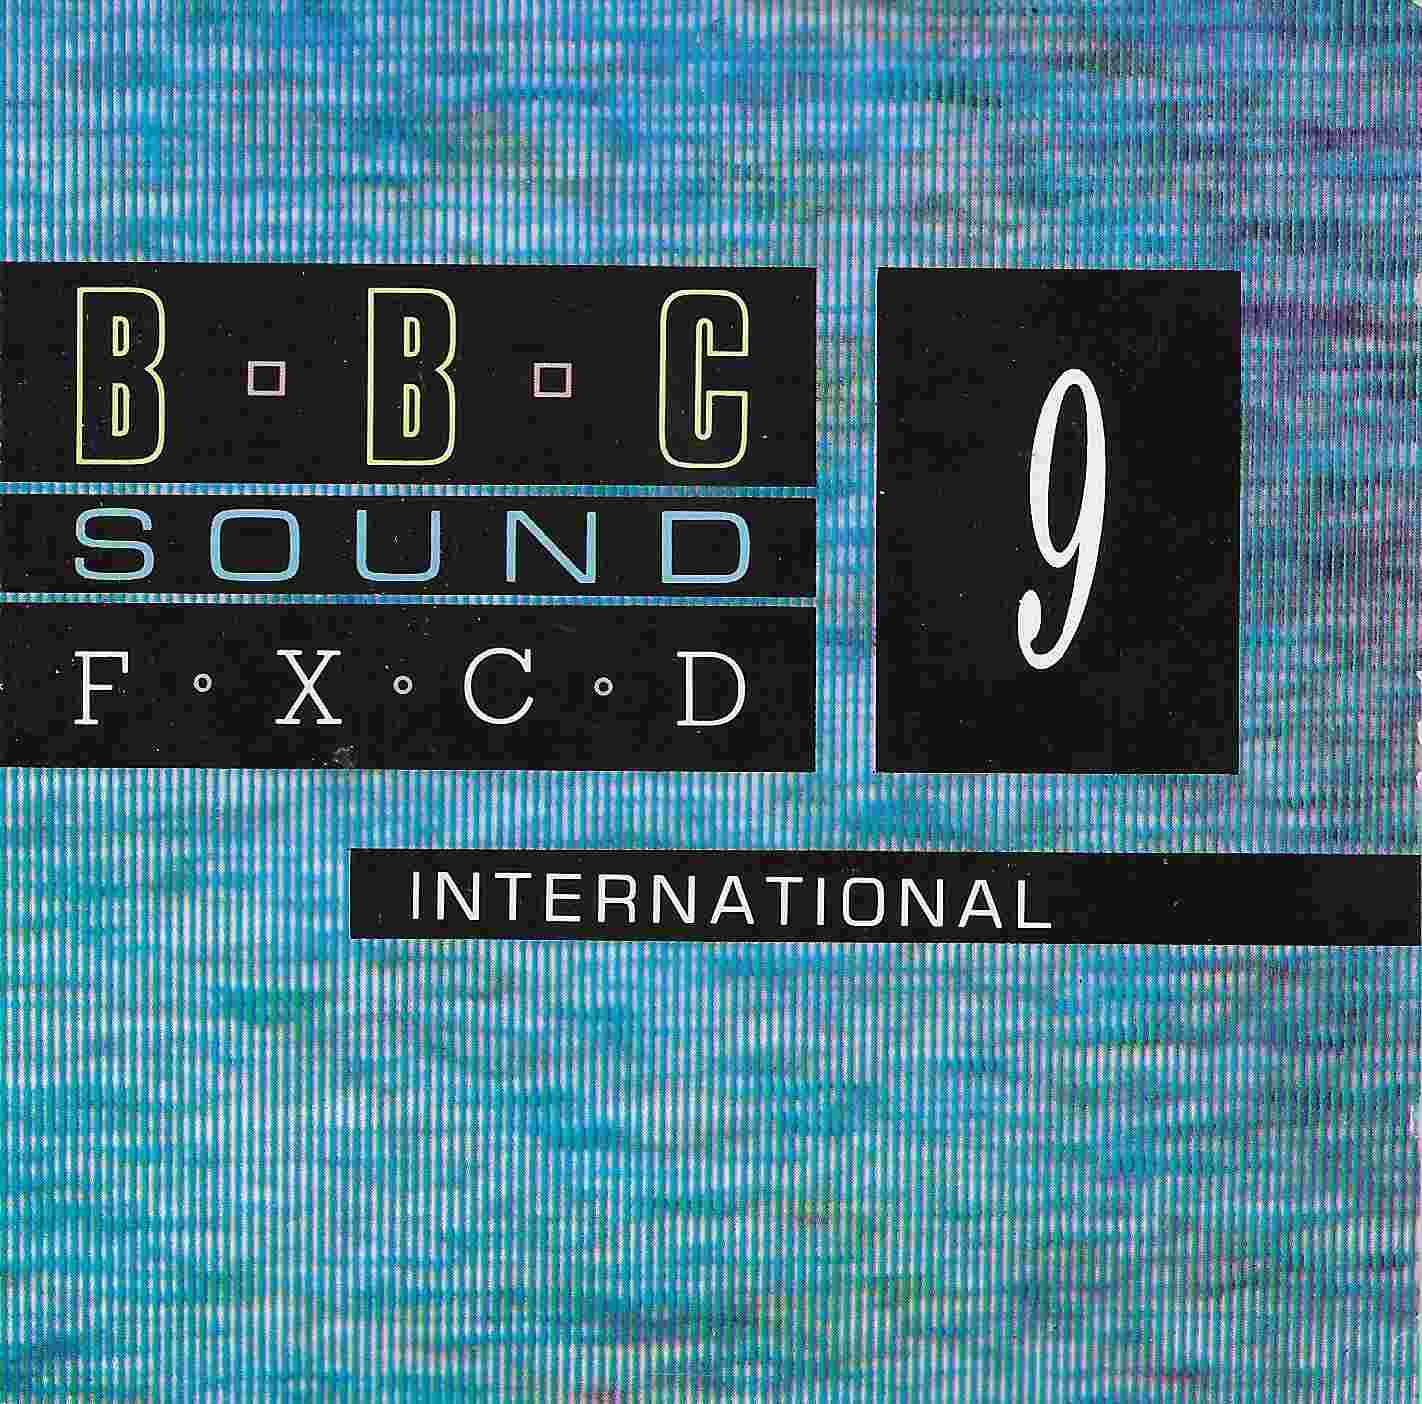 Image of BBCCD SFX009